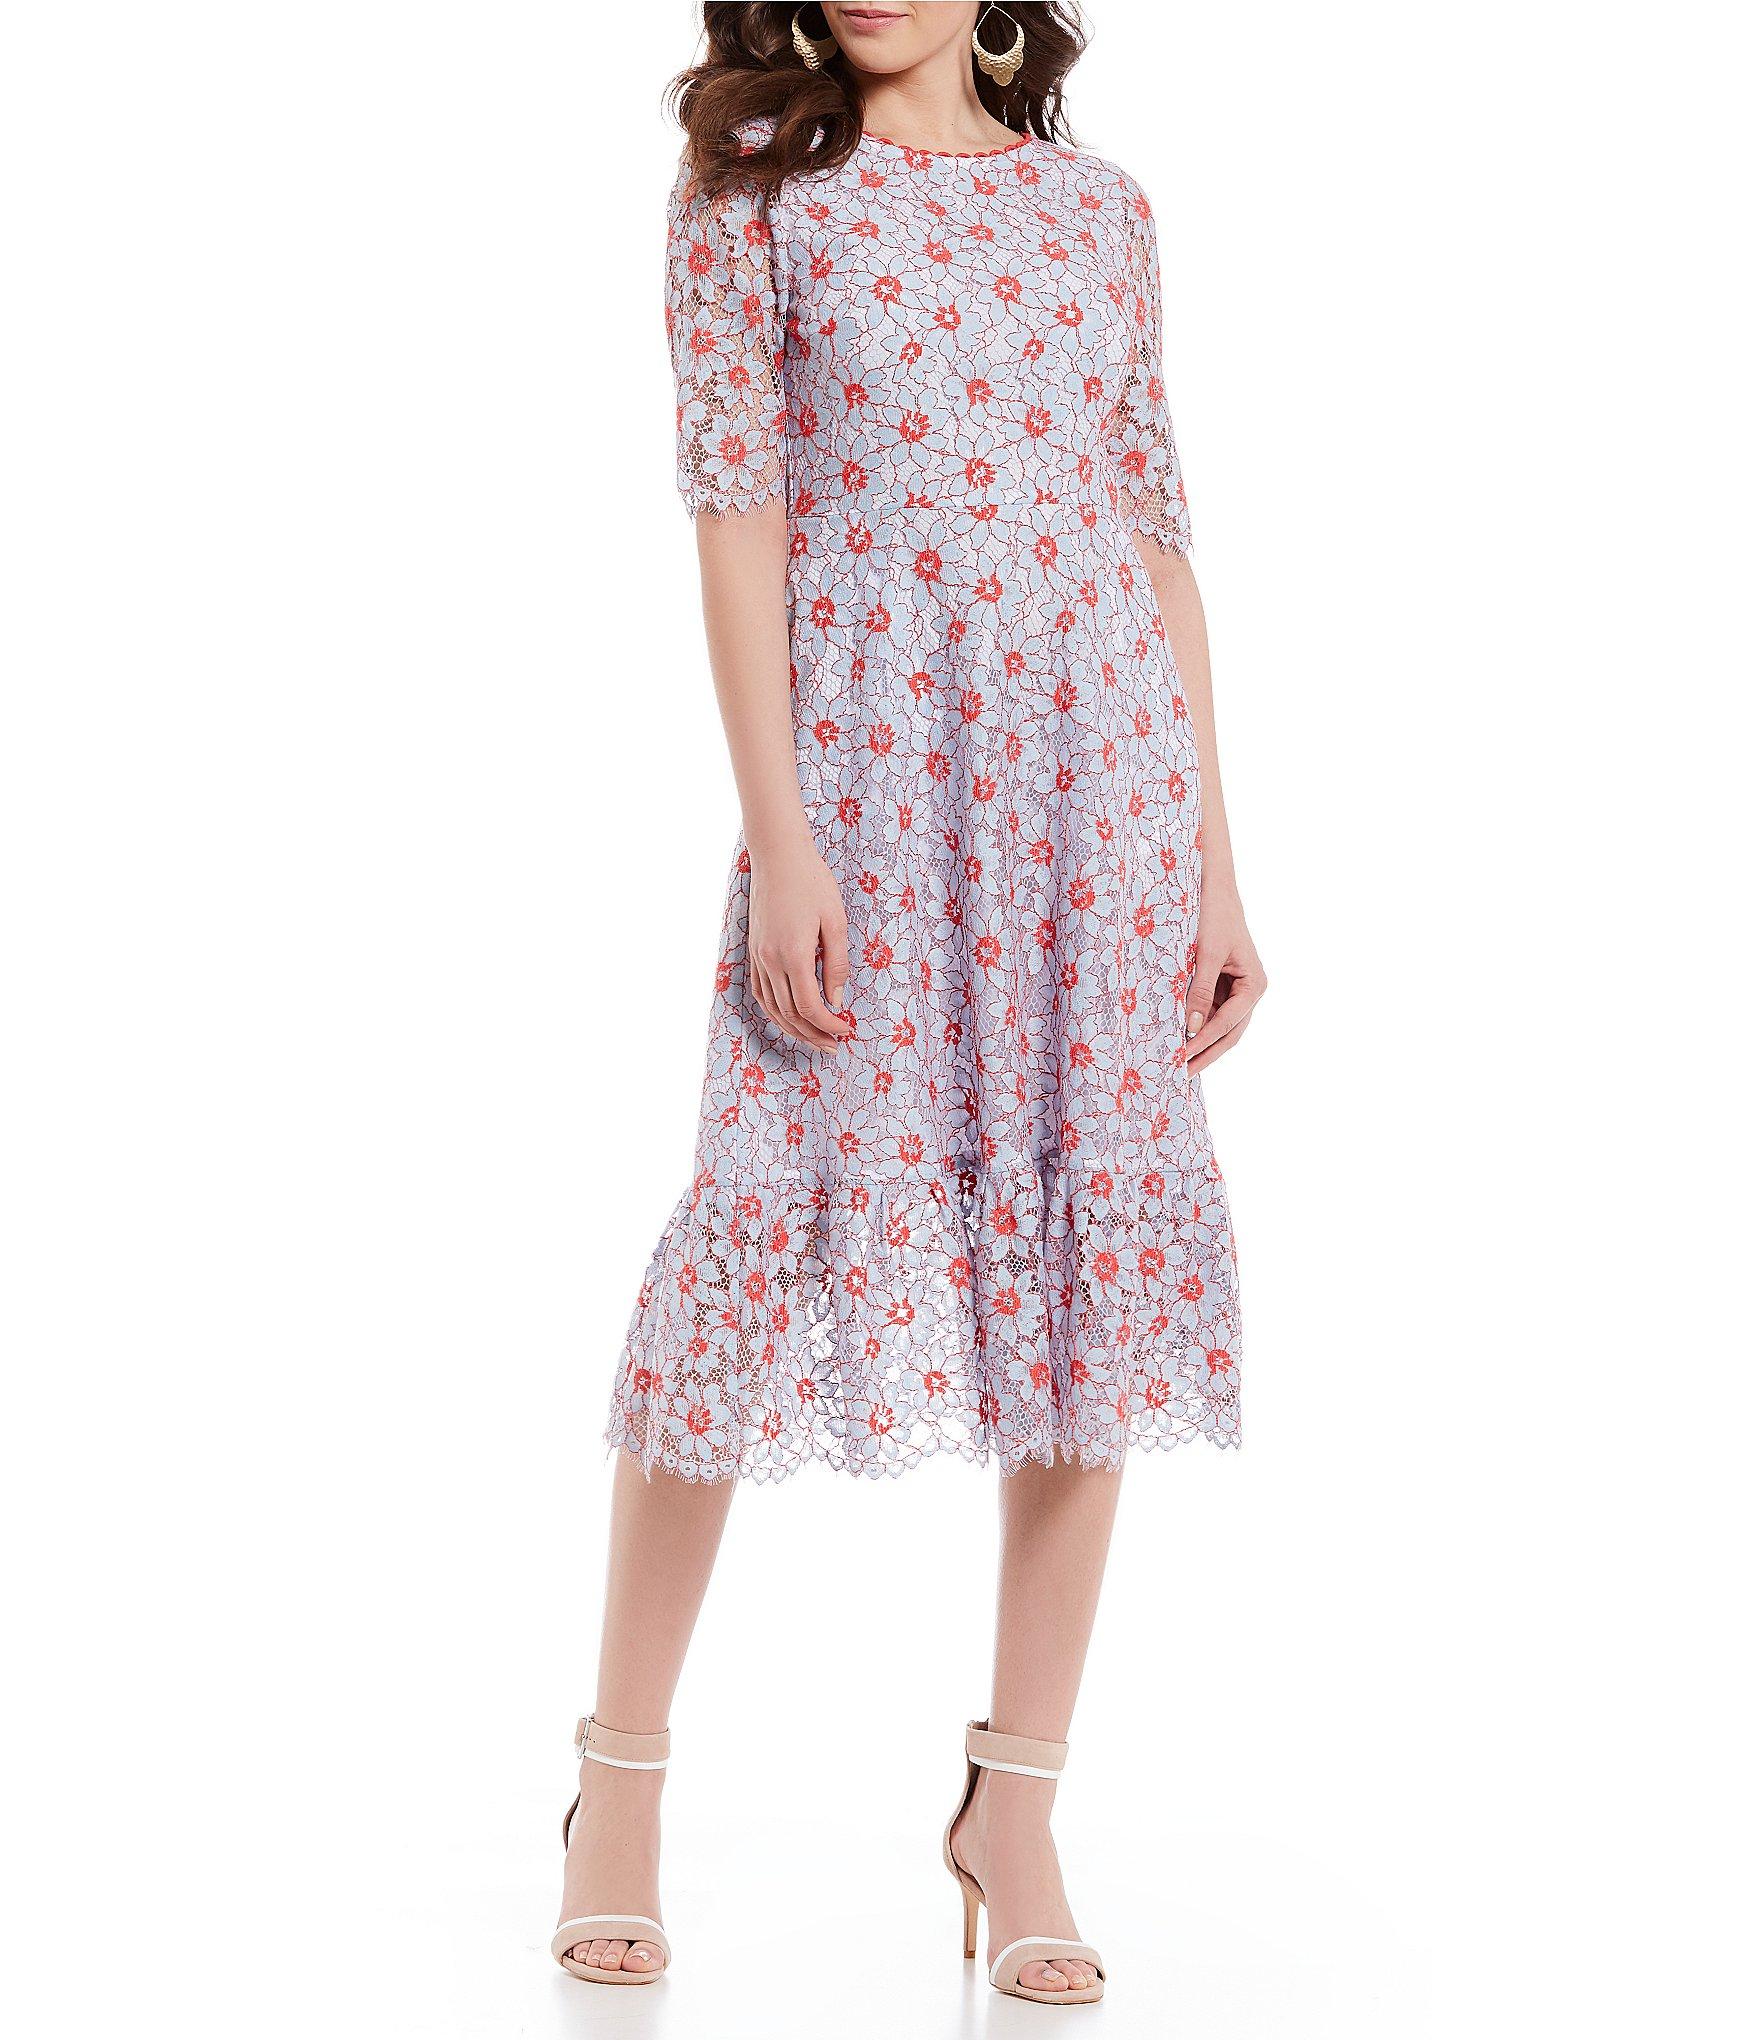 Lyst - Draper James Floral Lace Flounce Hem Midi Dress in Red - Save 25%